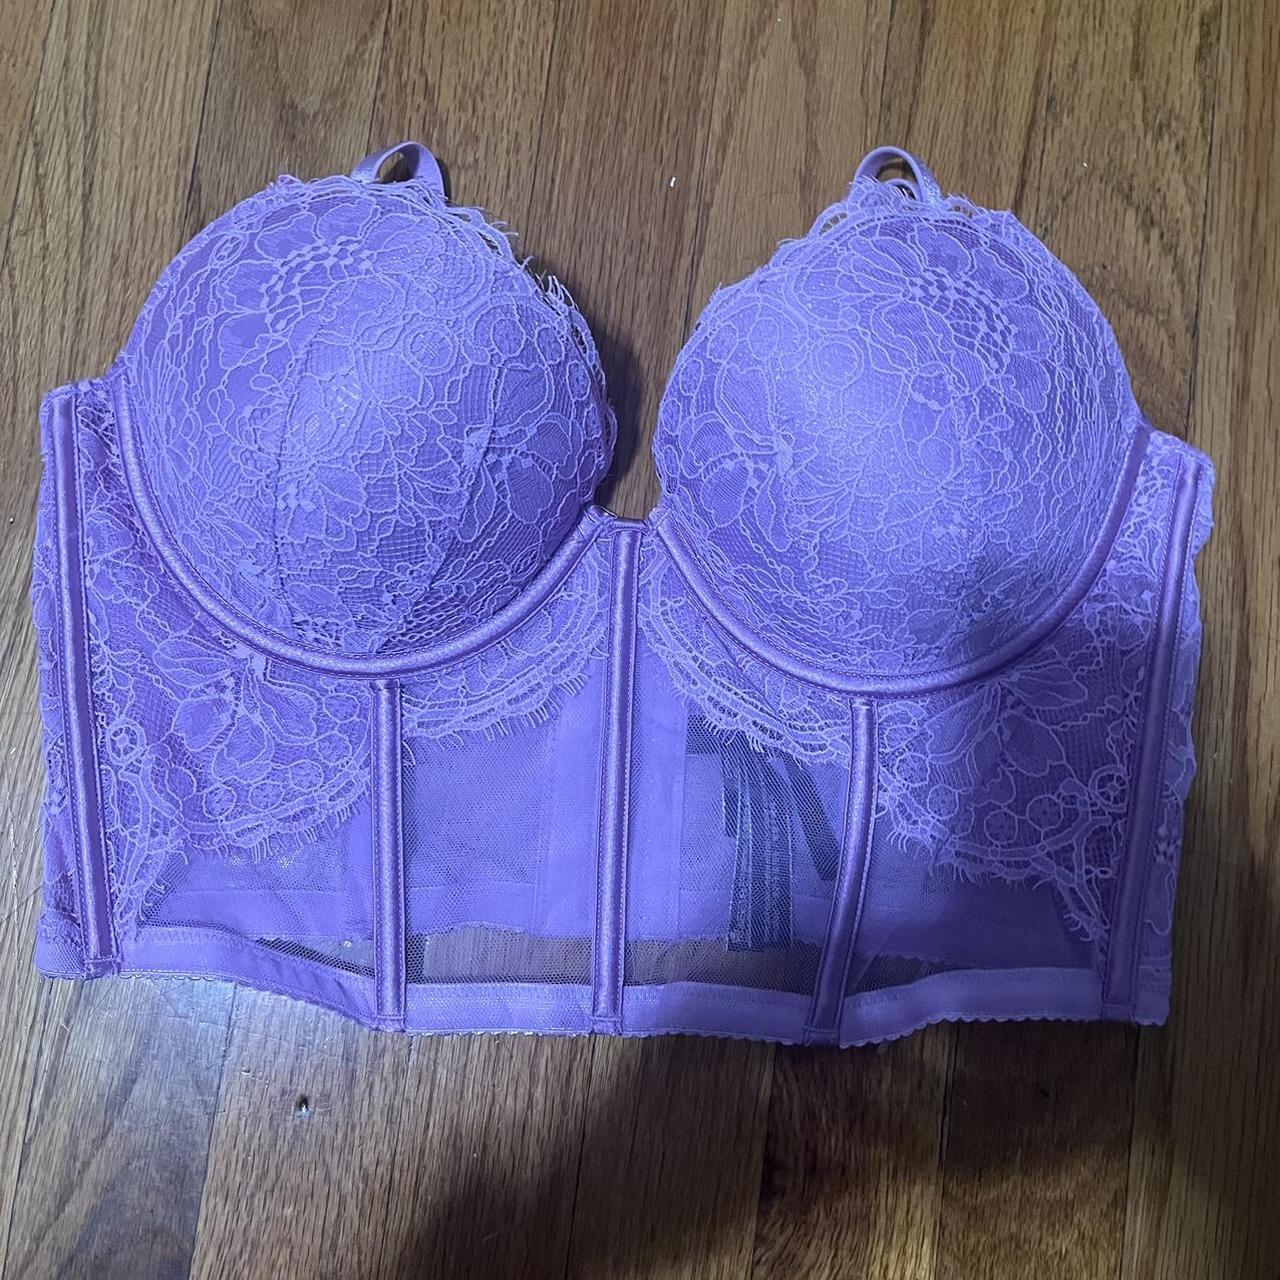 Victoria's Secret Purple Lace Very Sexy Push-Up Bra - Depop